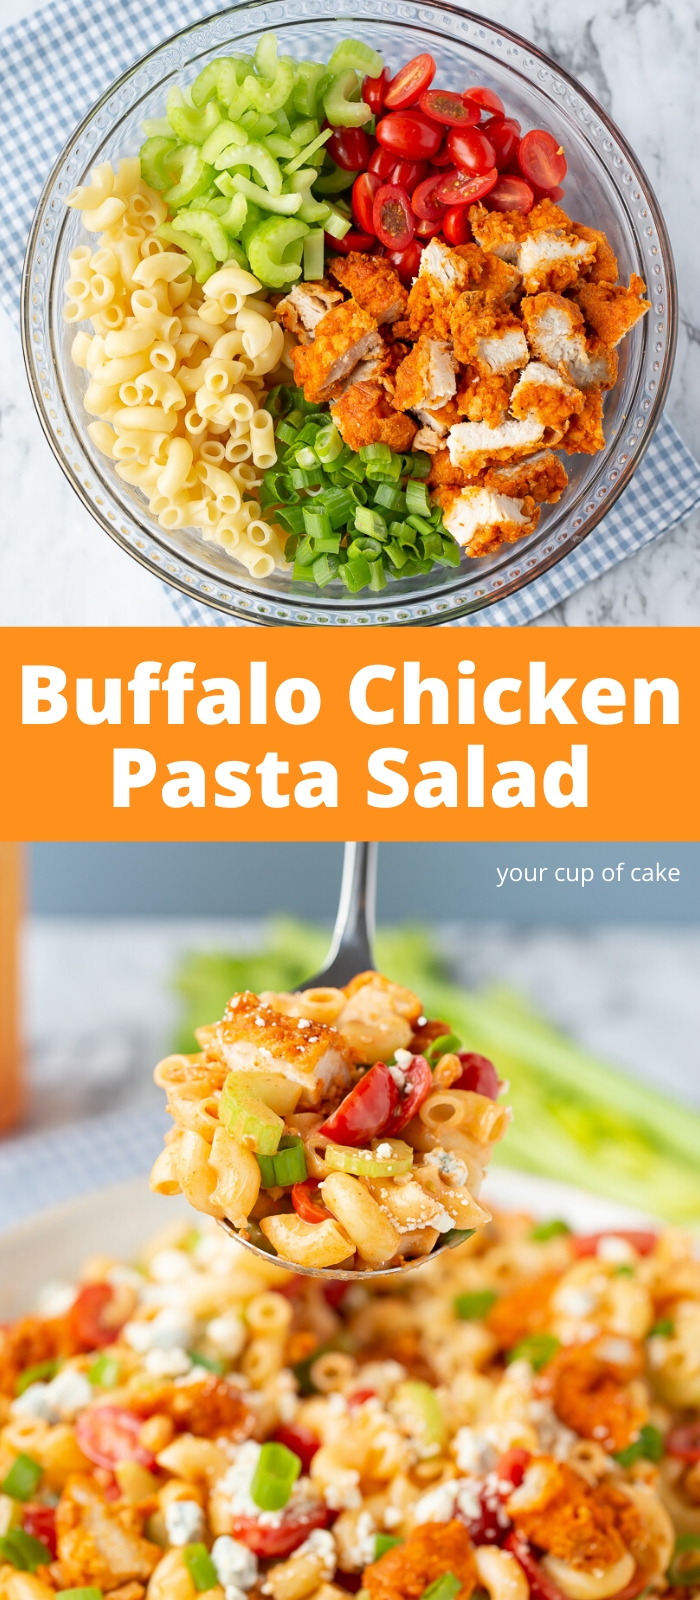 https://www.yourcupofcake.com/wp-content/uploads/2019/05/Buffalo-Chicken-Pasta-Salad-1.jpg